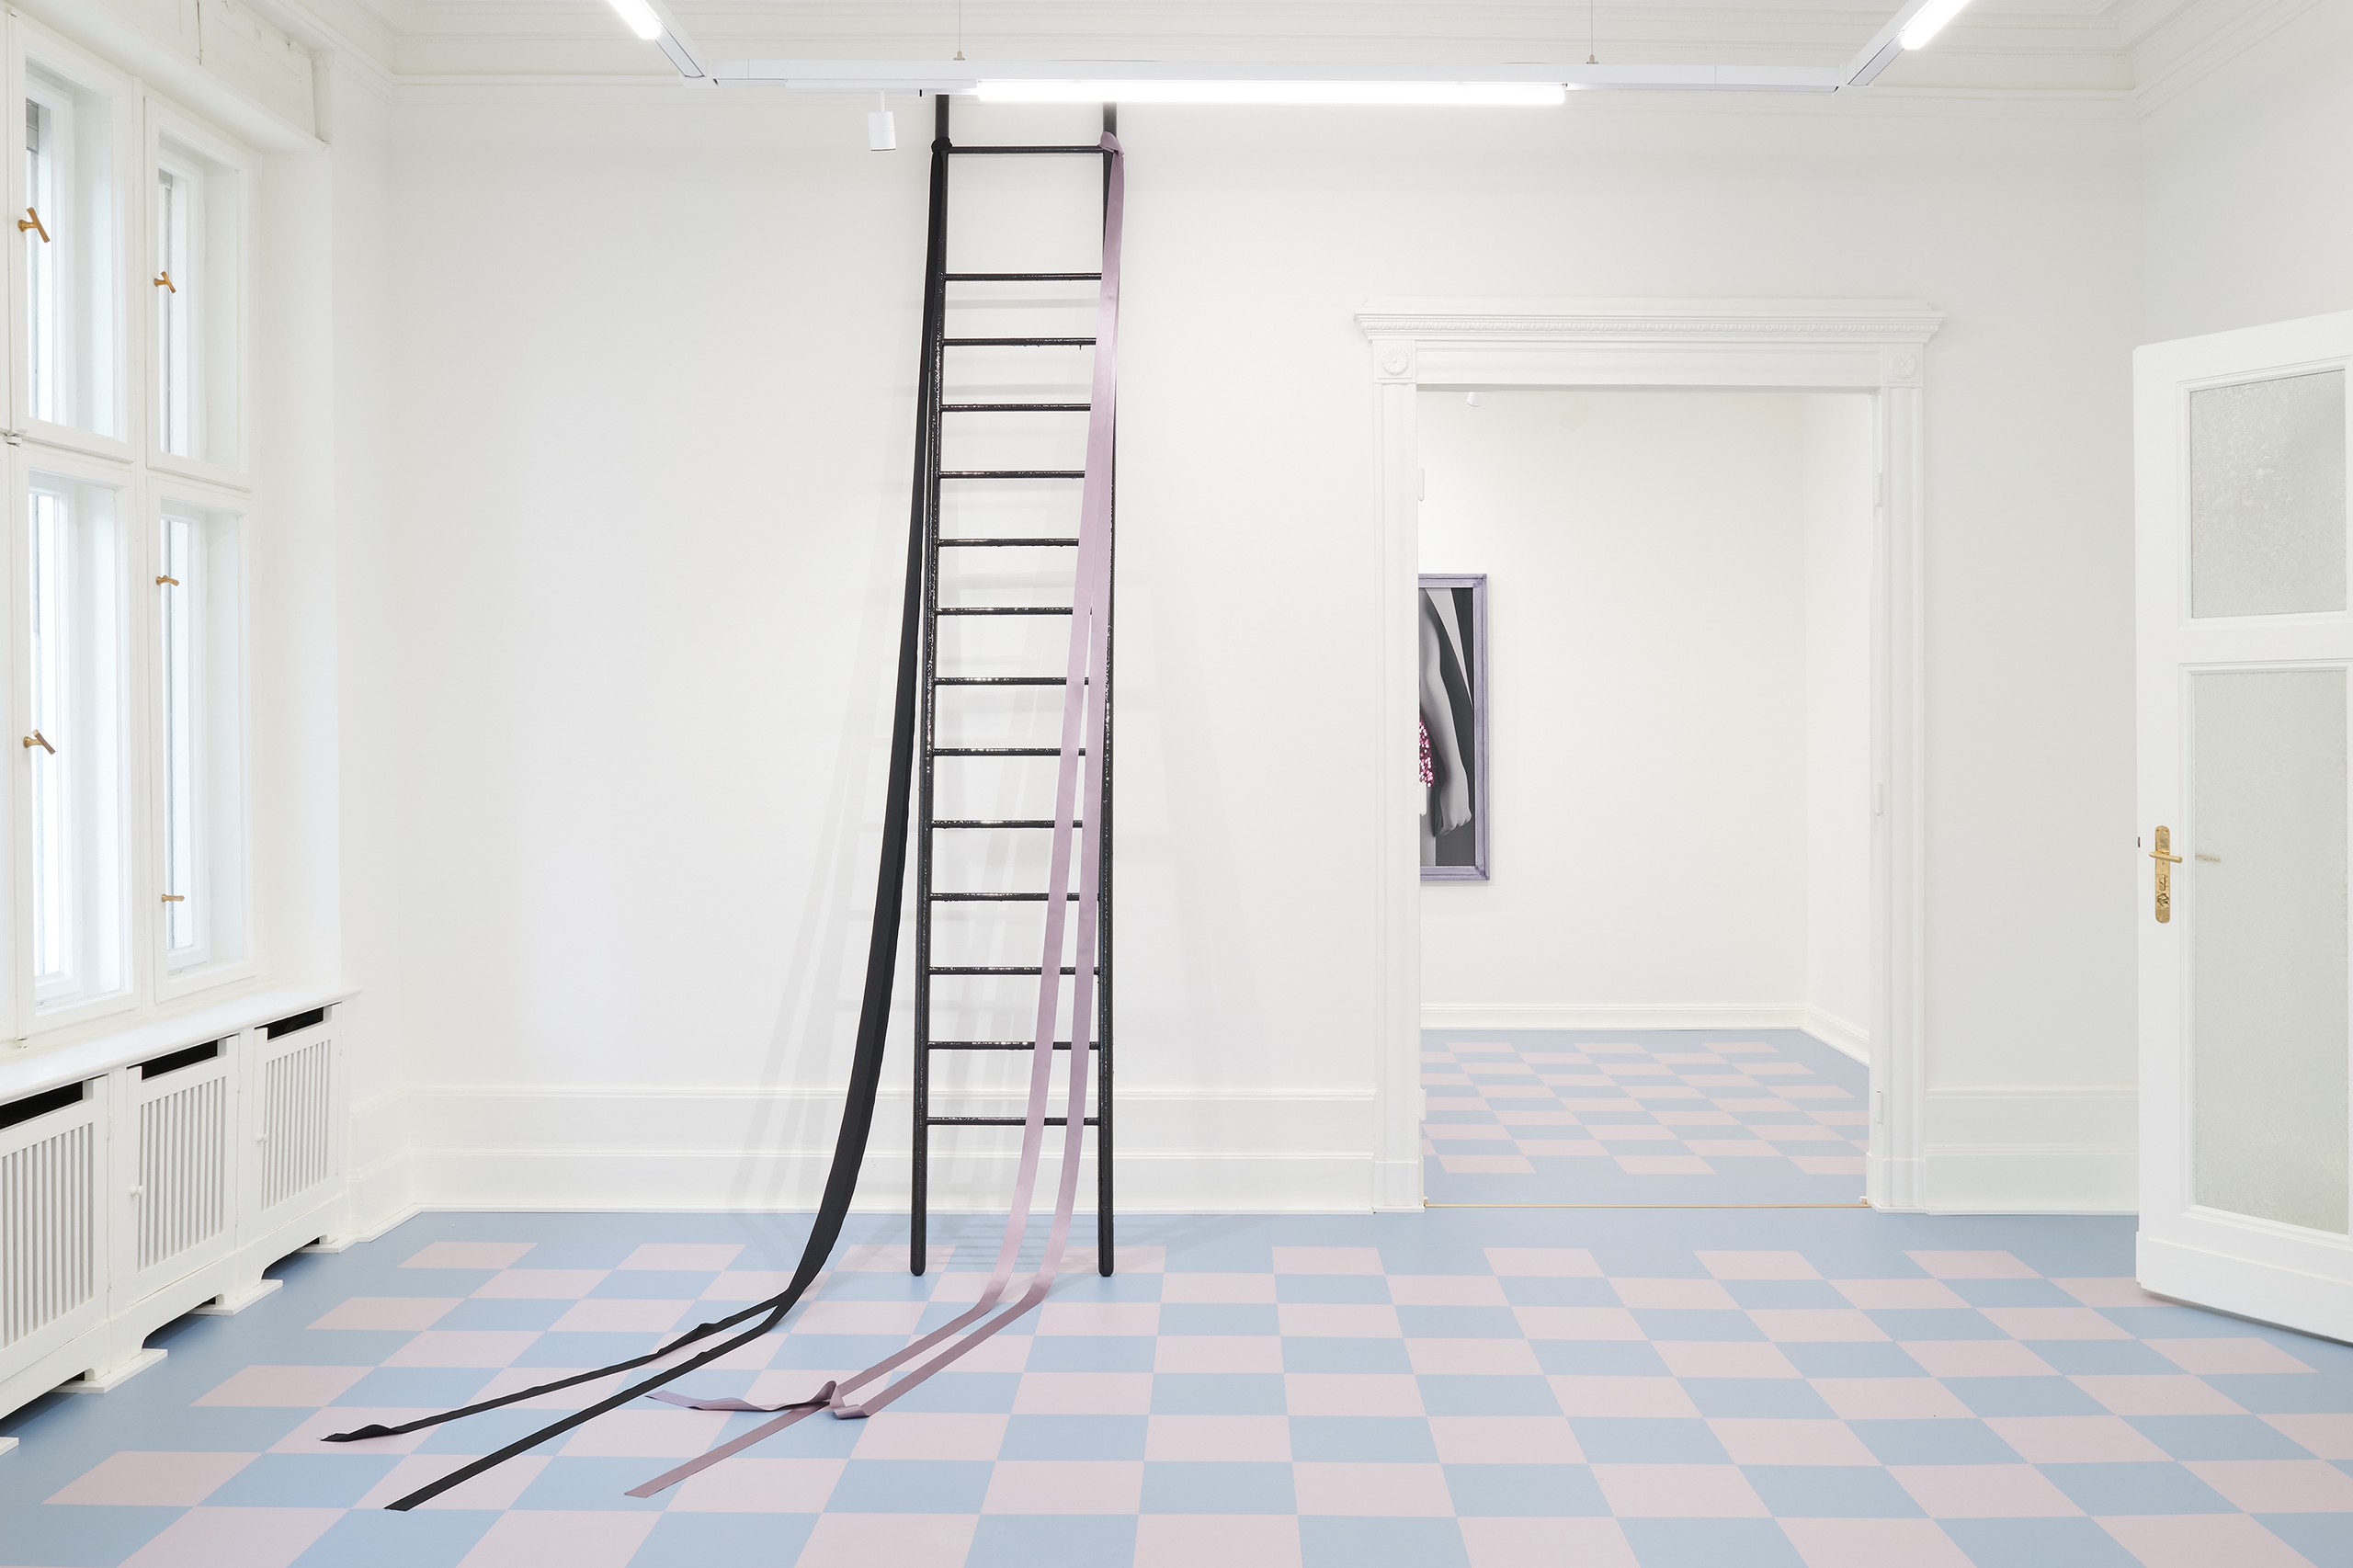 Installation view, Bunny Rogers, Ms Agony, Société, Berlin, 2020/21